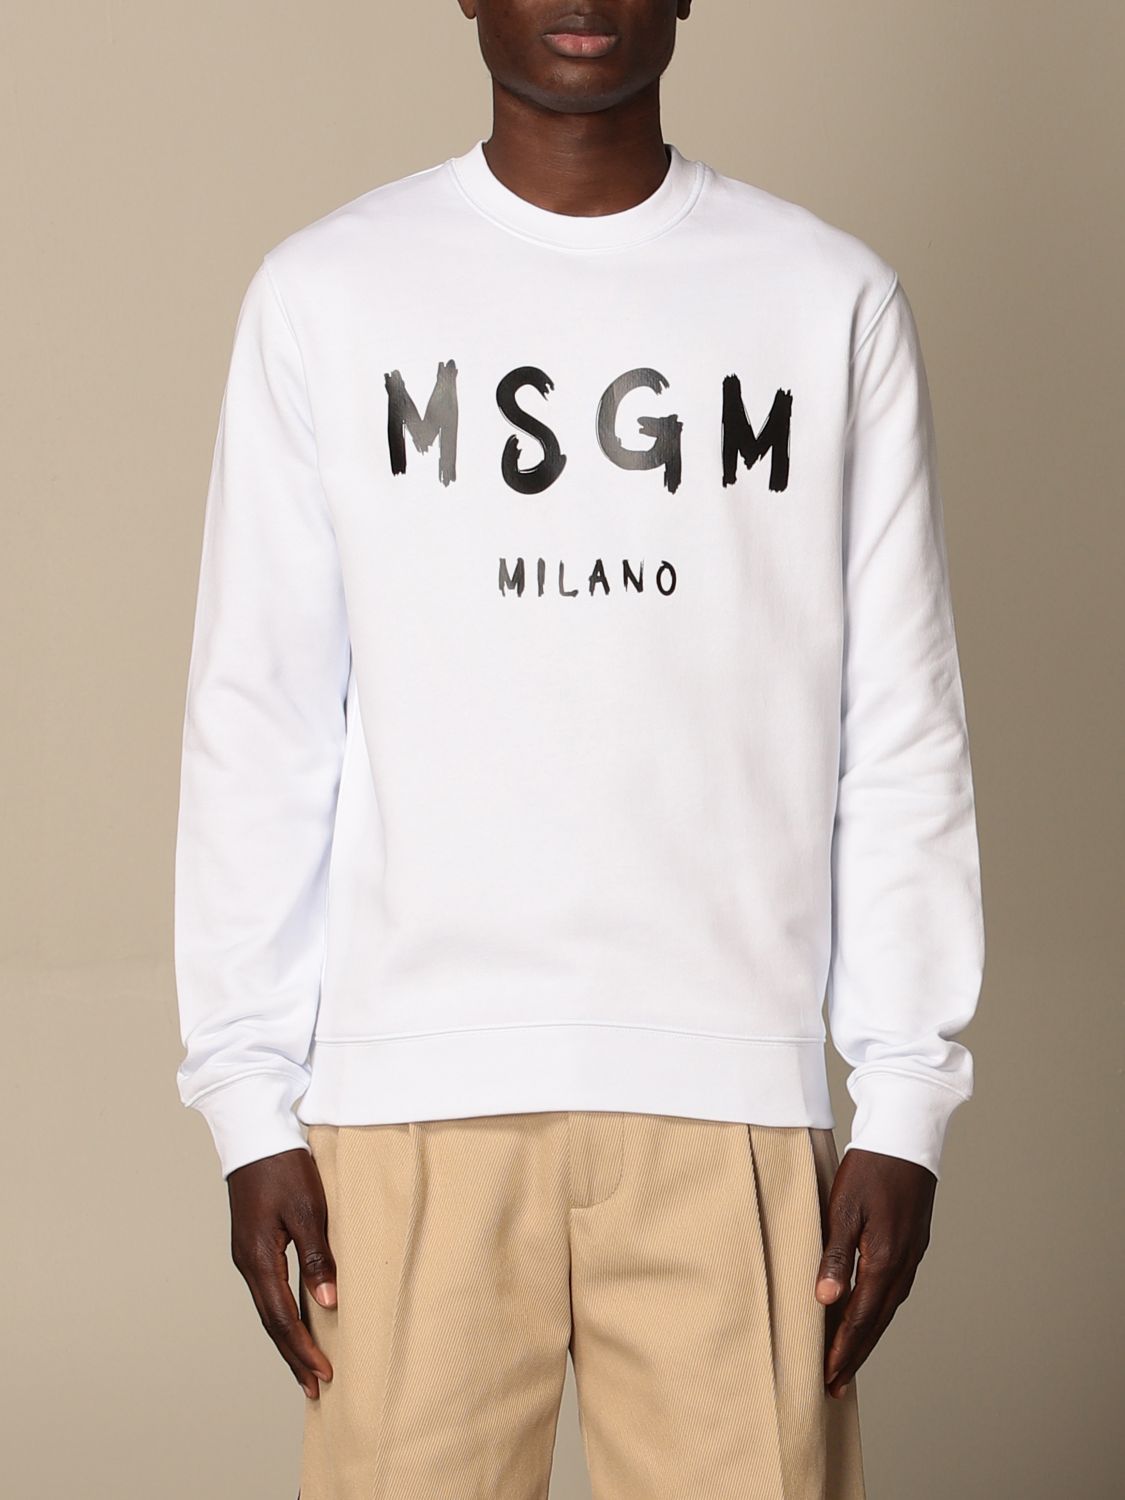 Msgm crewneck sweatshirt with logo